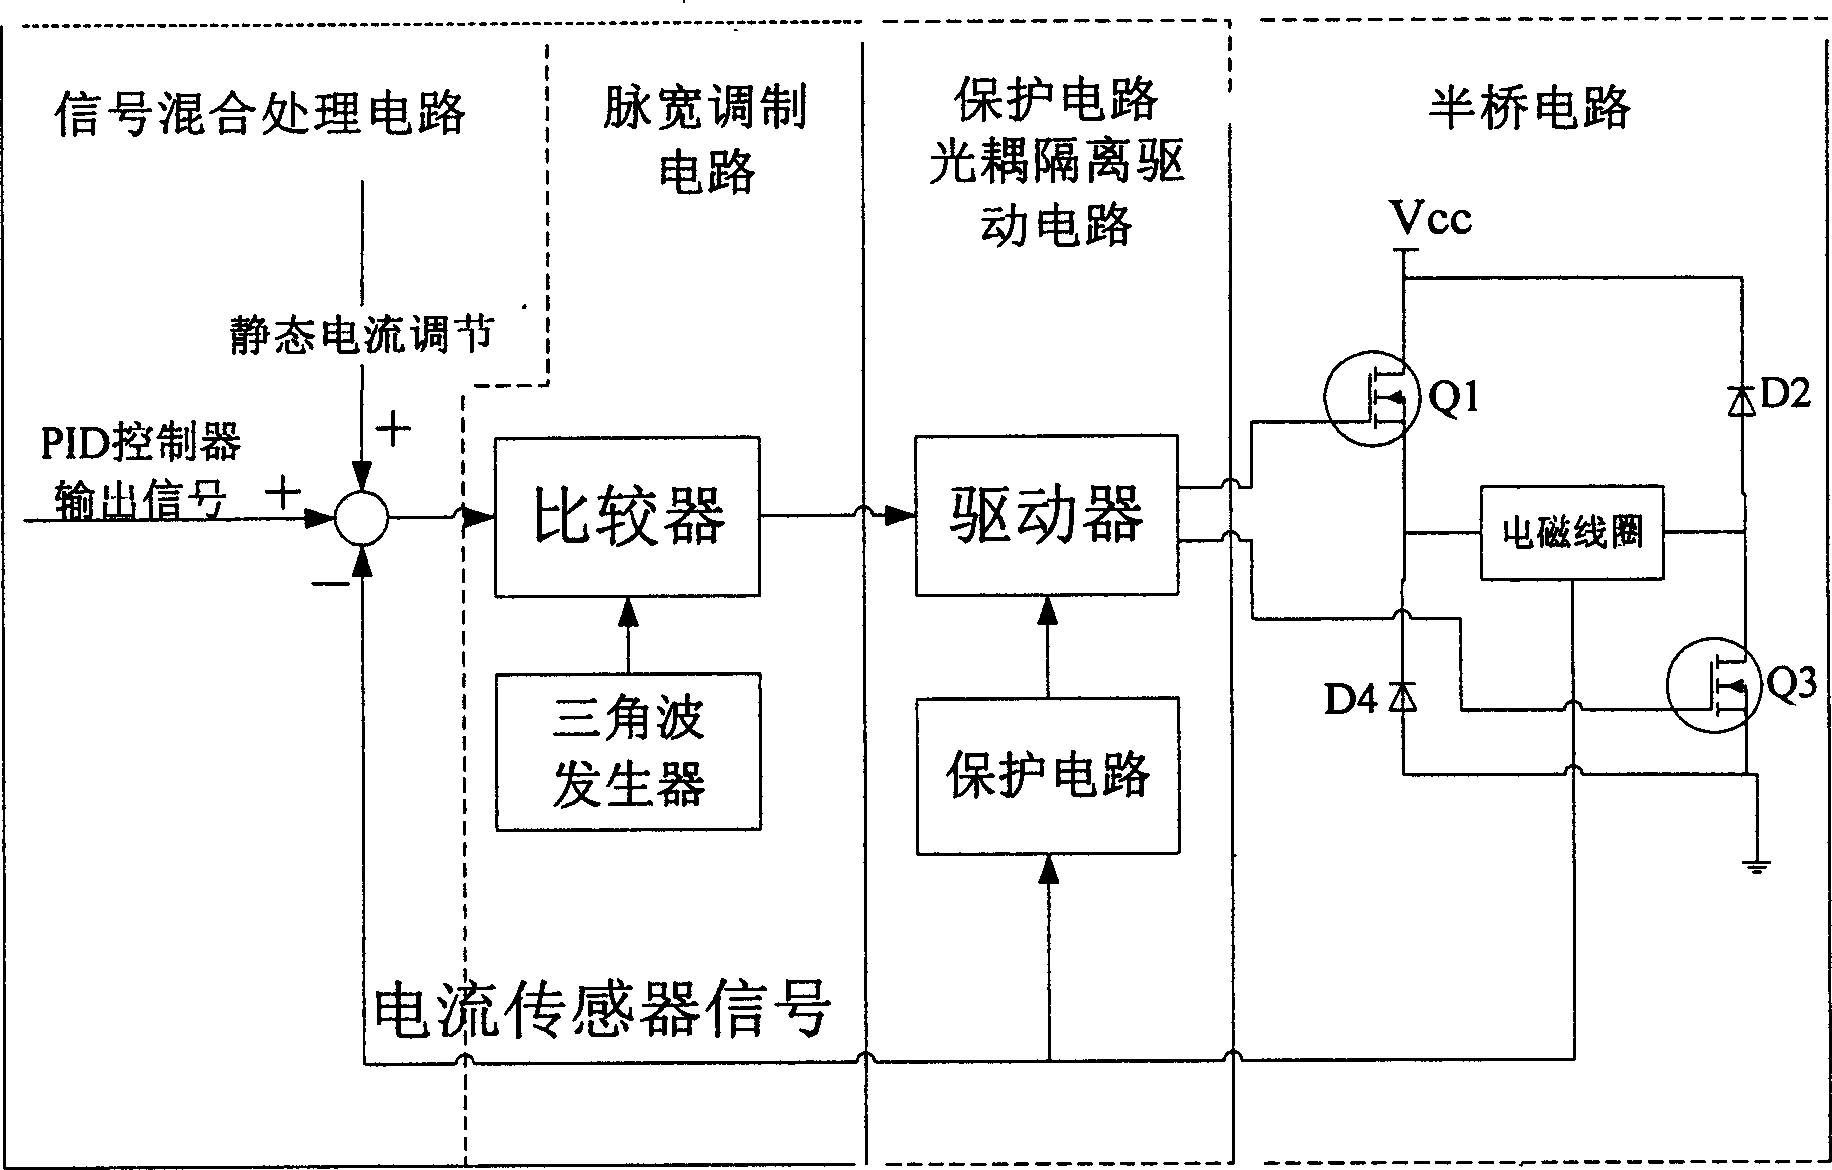 Tri-level switch power amplifier